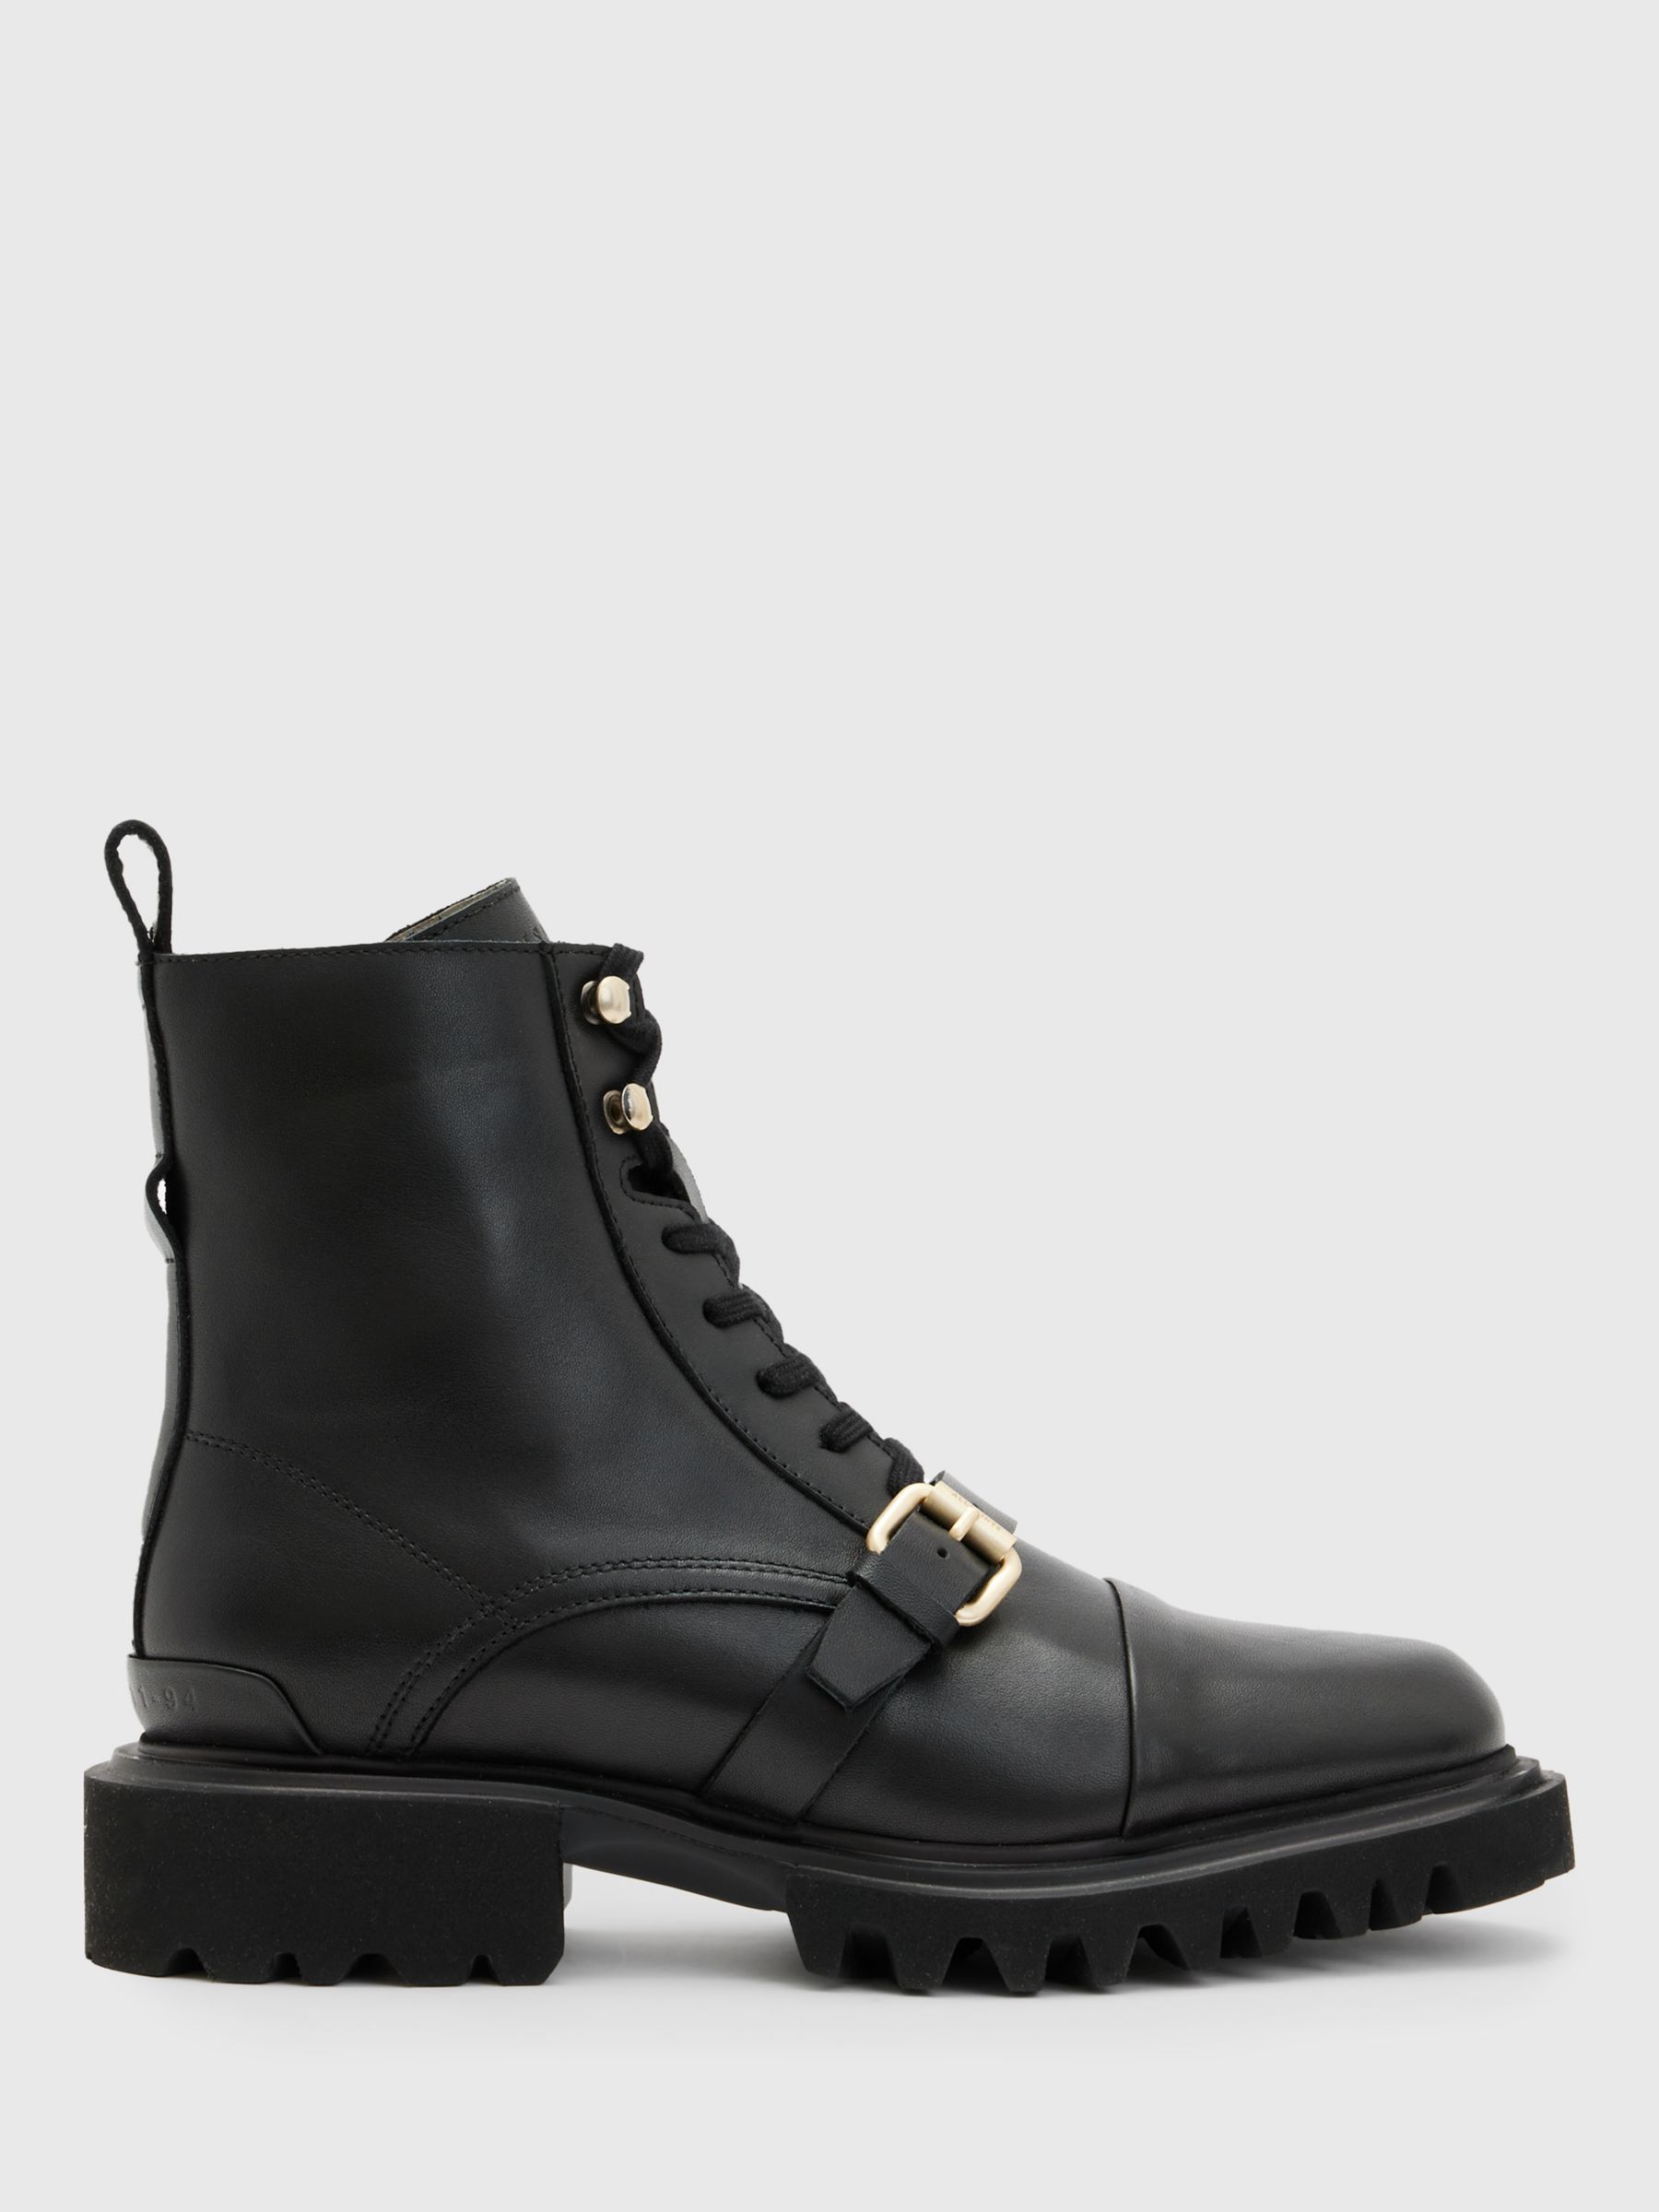 AllSaints Tori Leather Lace Up Ankle Boots, Black/Warm Brass, 3